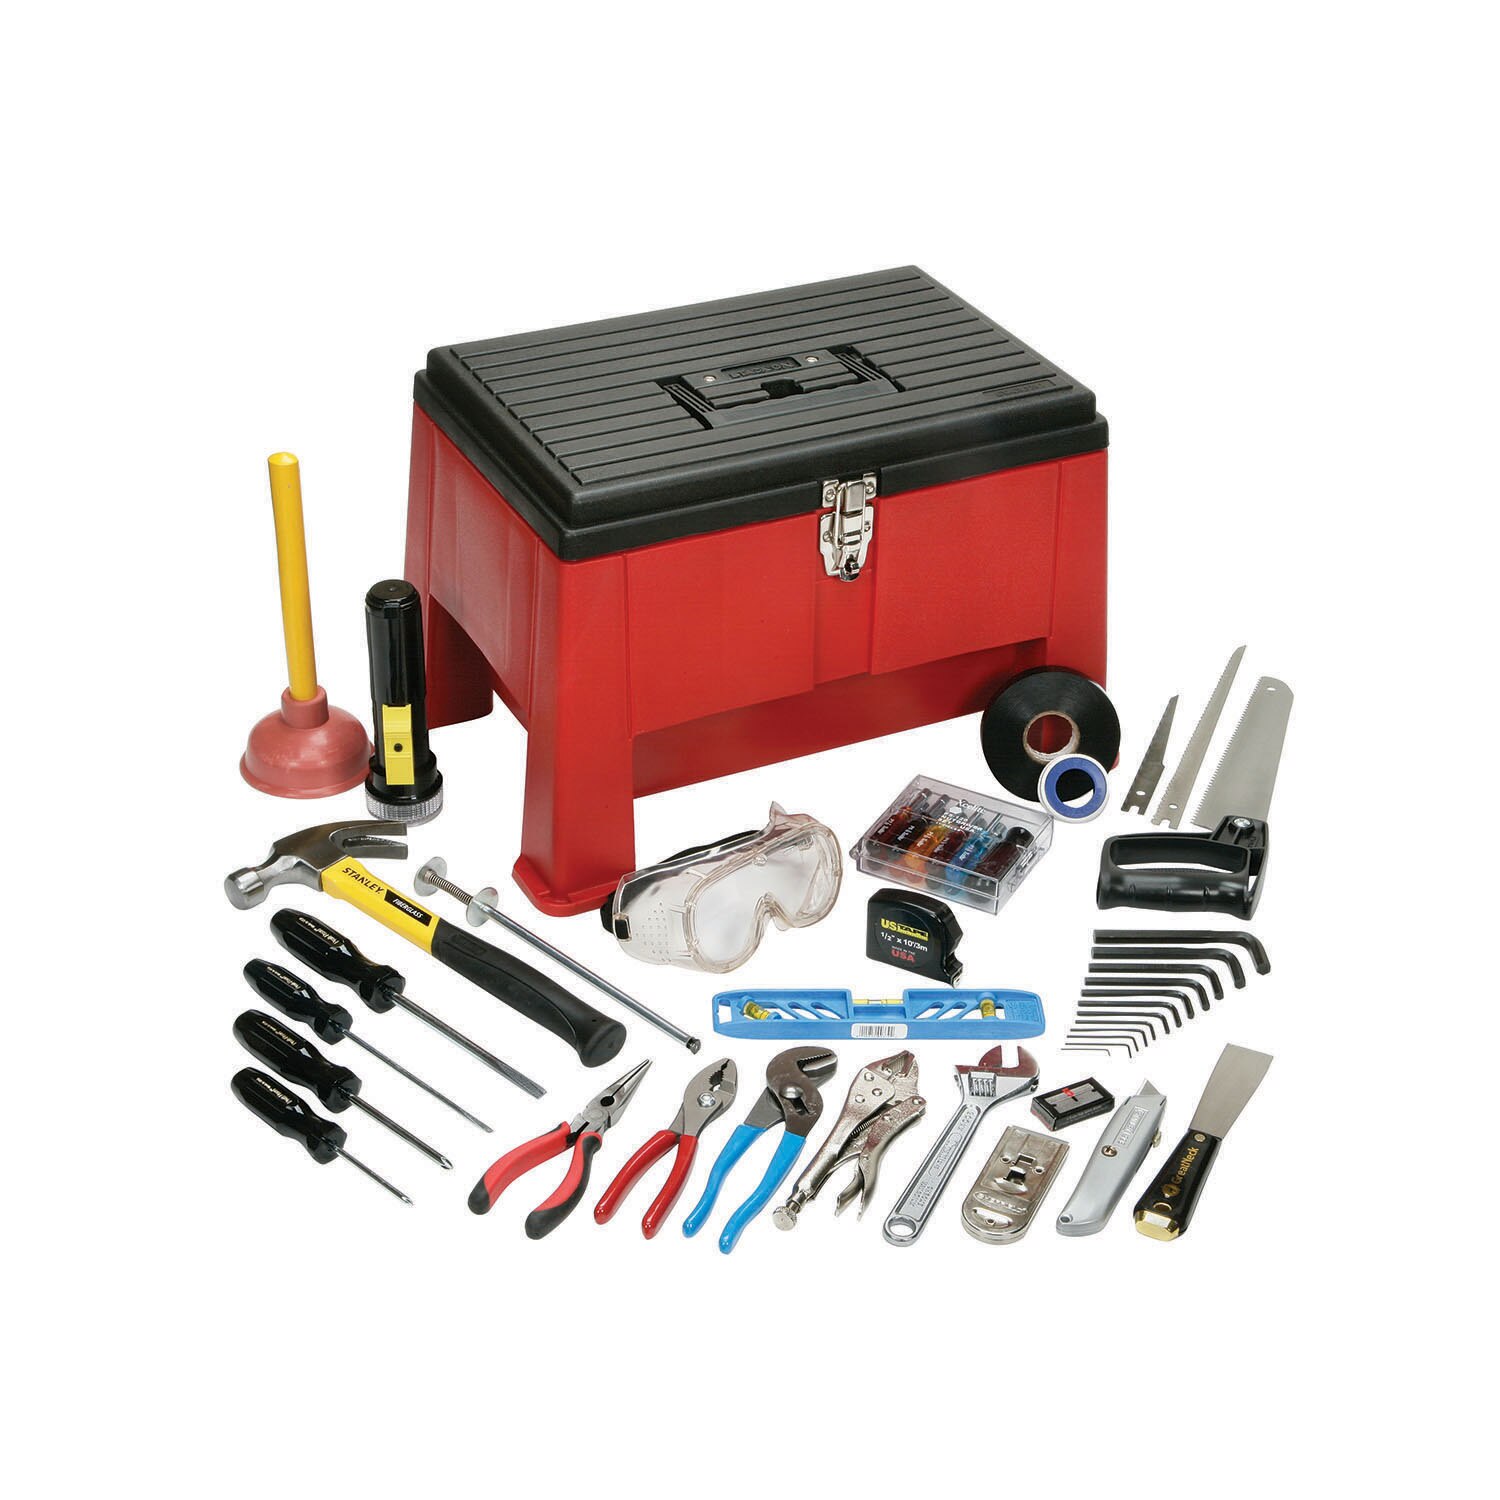 Tool Box, Home Repair Tool Kit, Tools Included, 20" x 13 1/2" x 13"